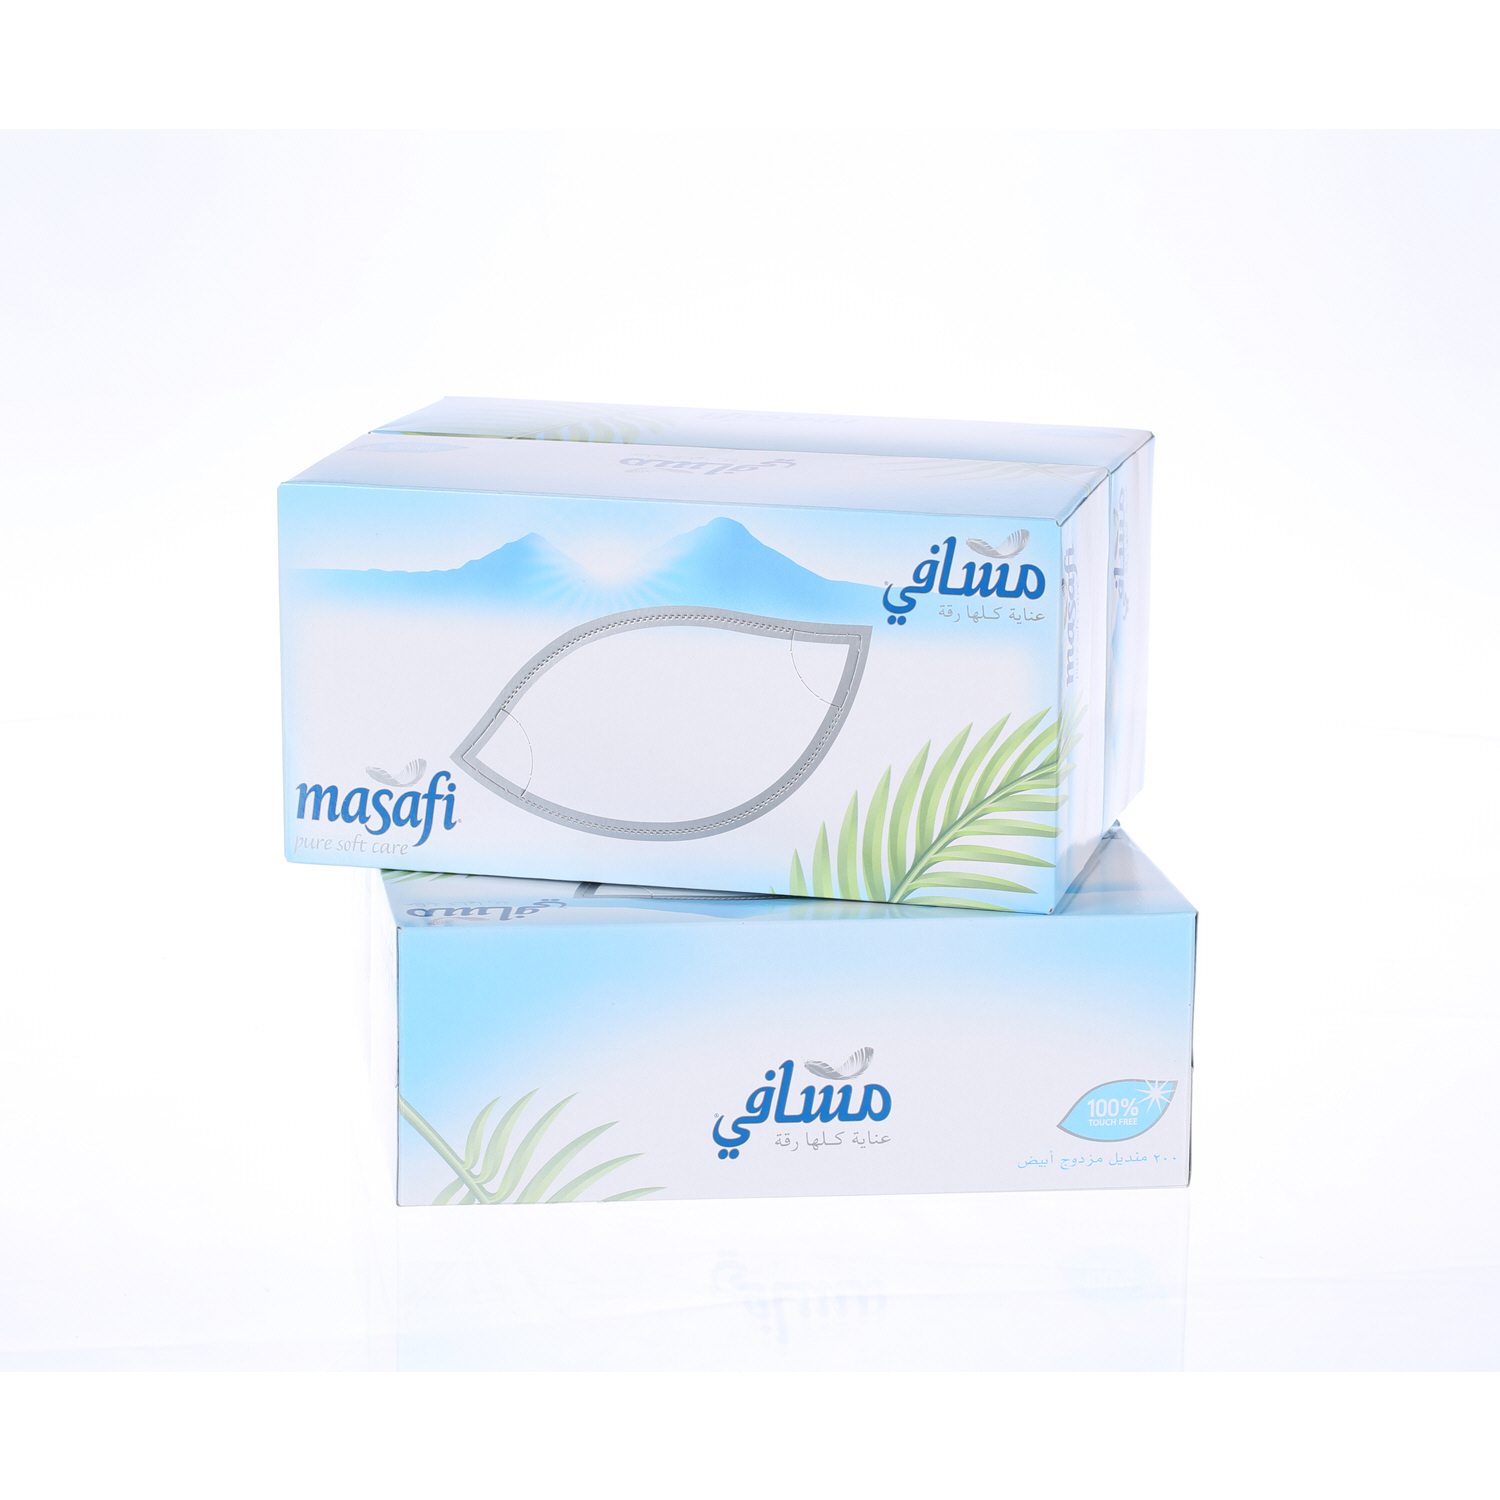 Masafi Facial Tissue White 200 × 4 Pack